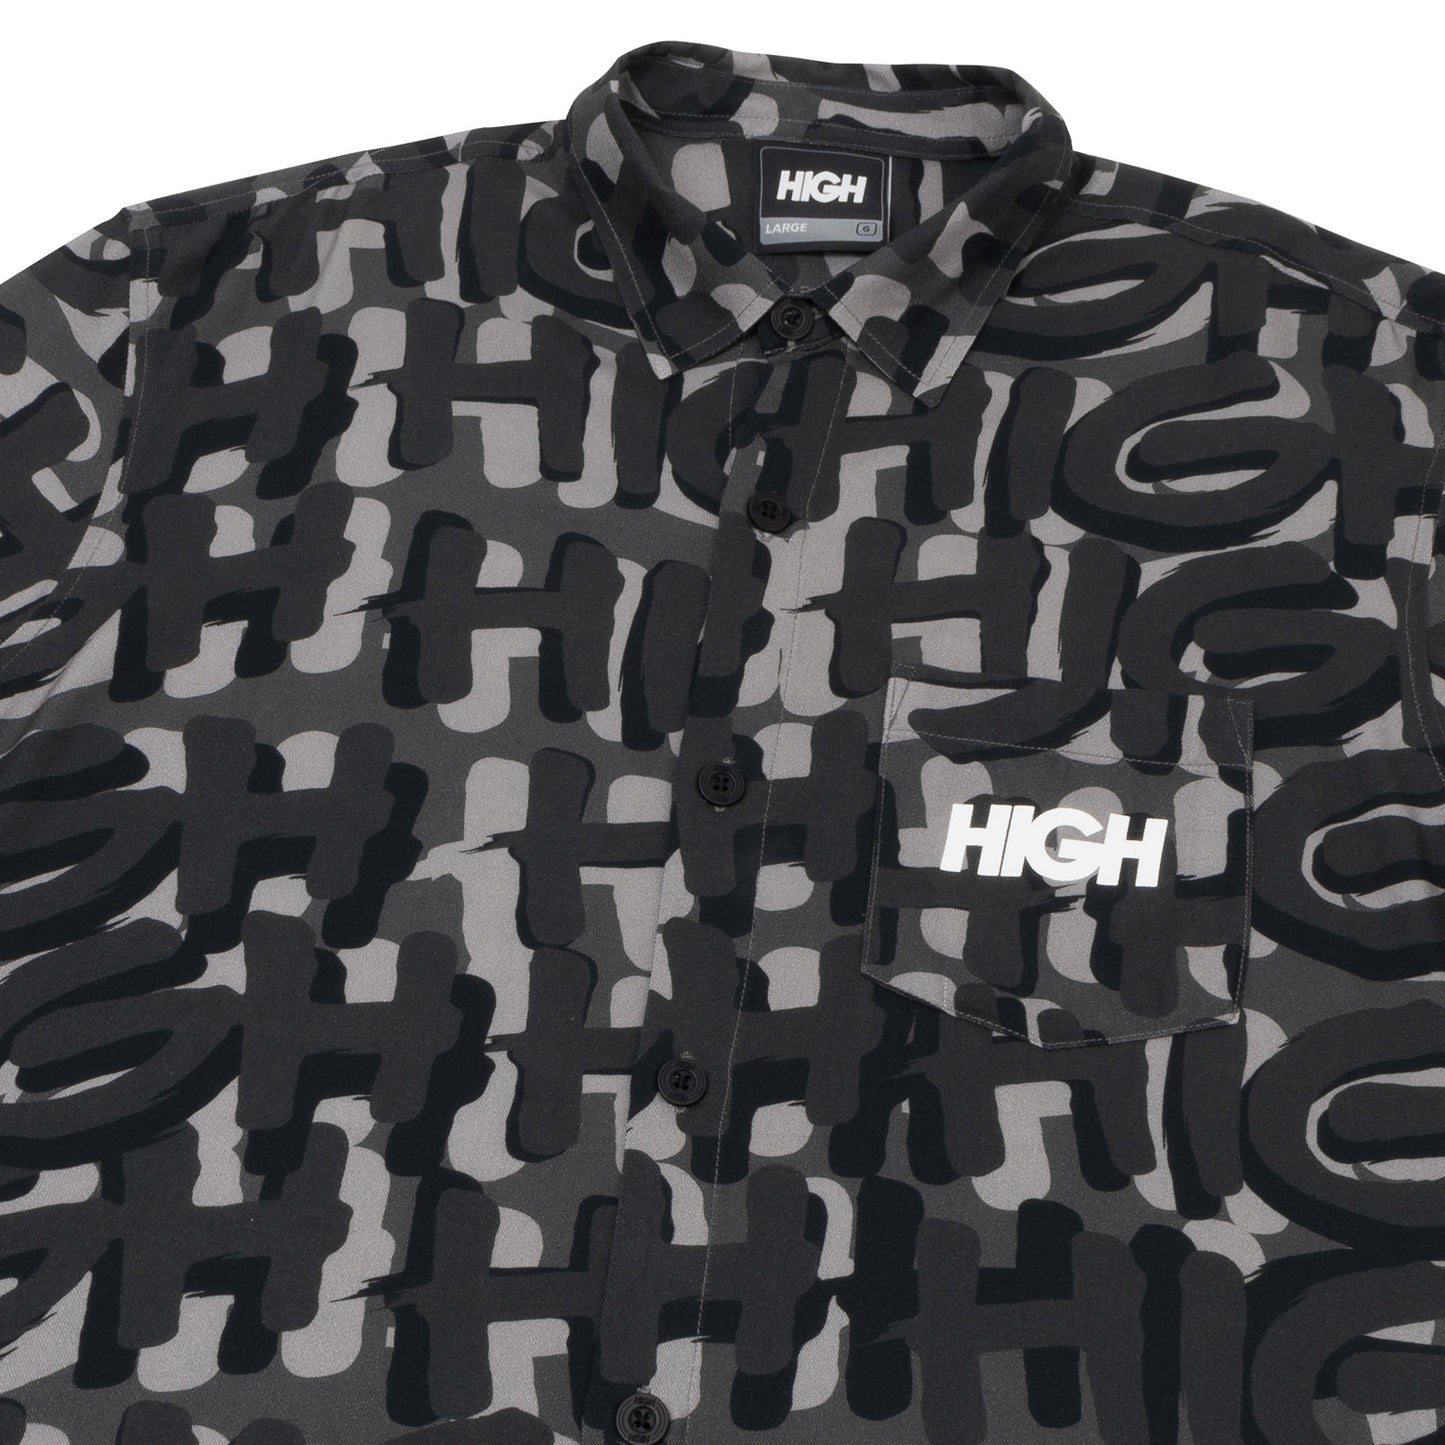 HIGH - Button T-Shirt Hotel (Black)